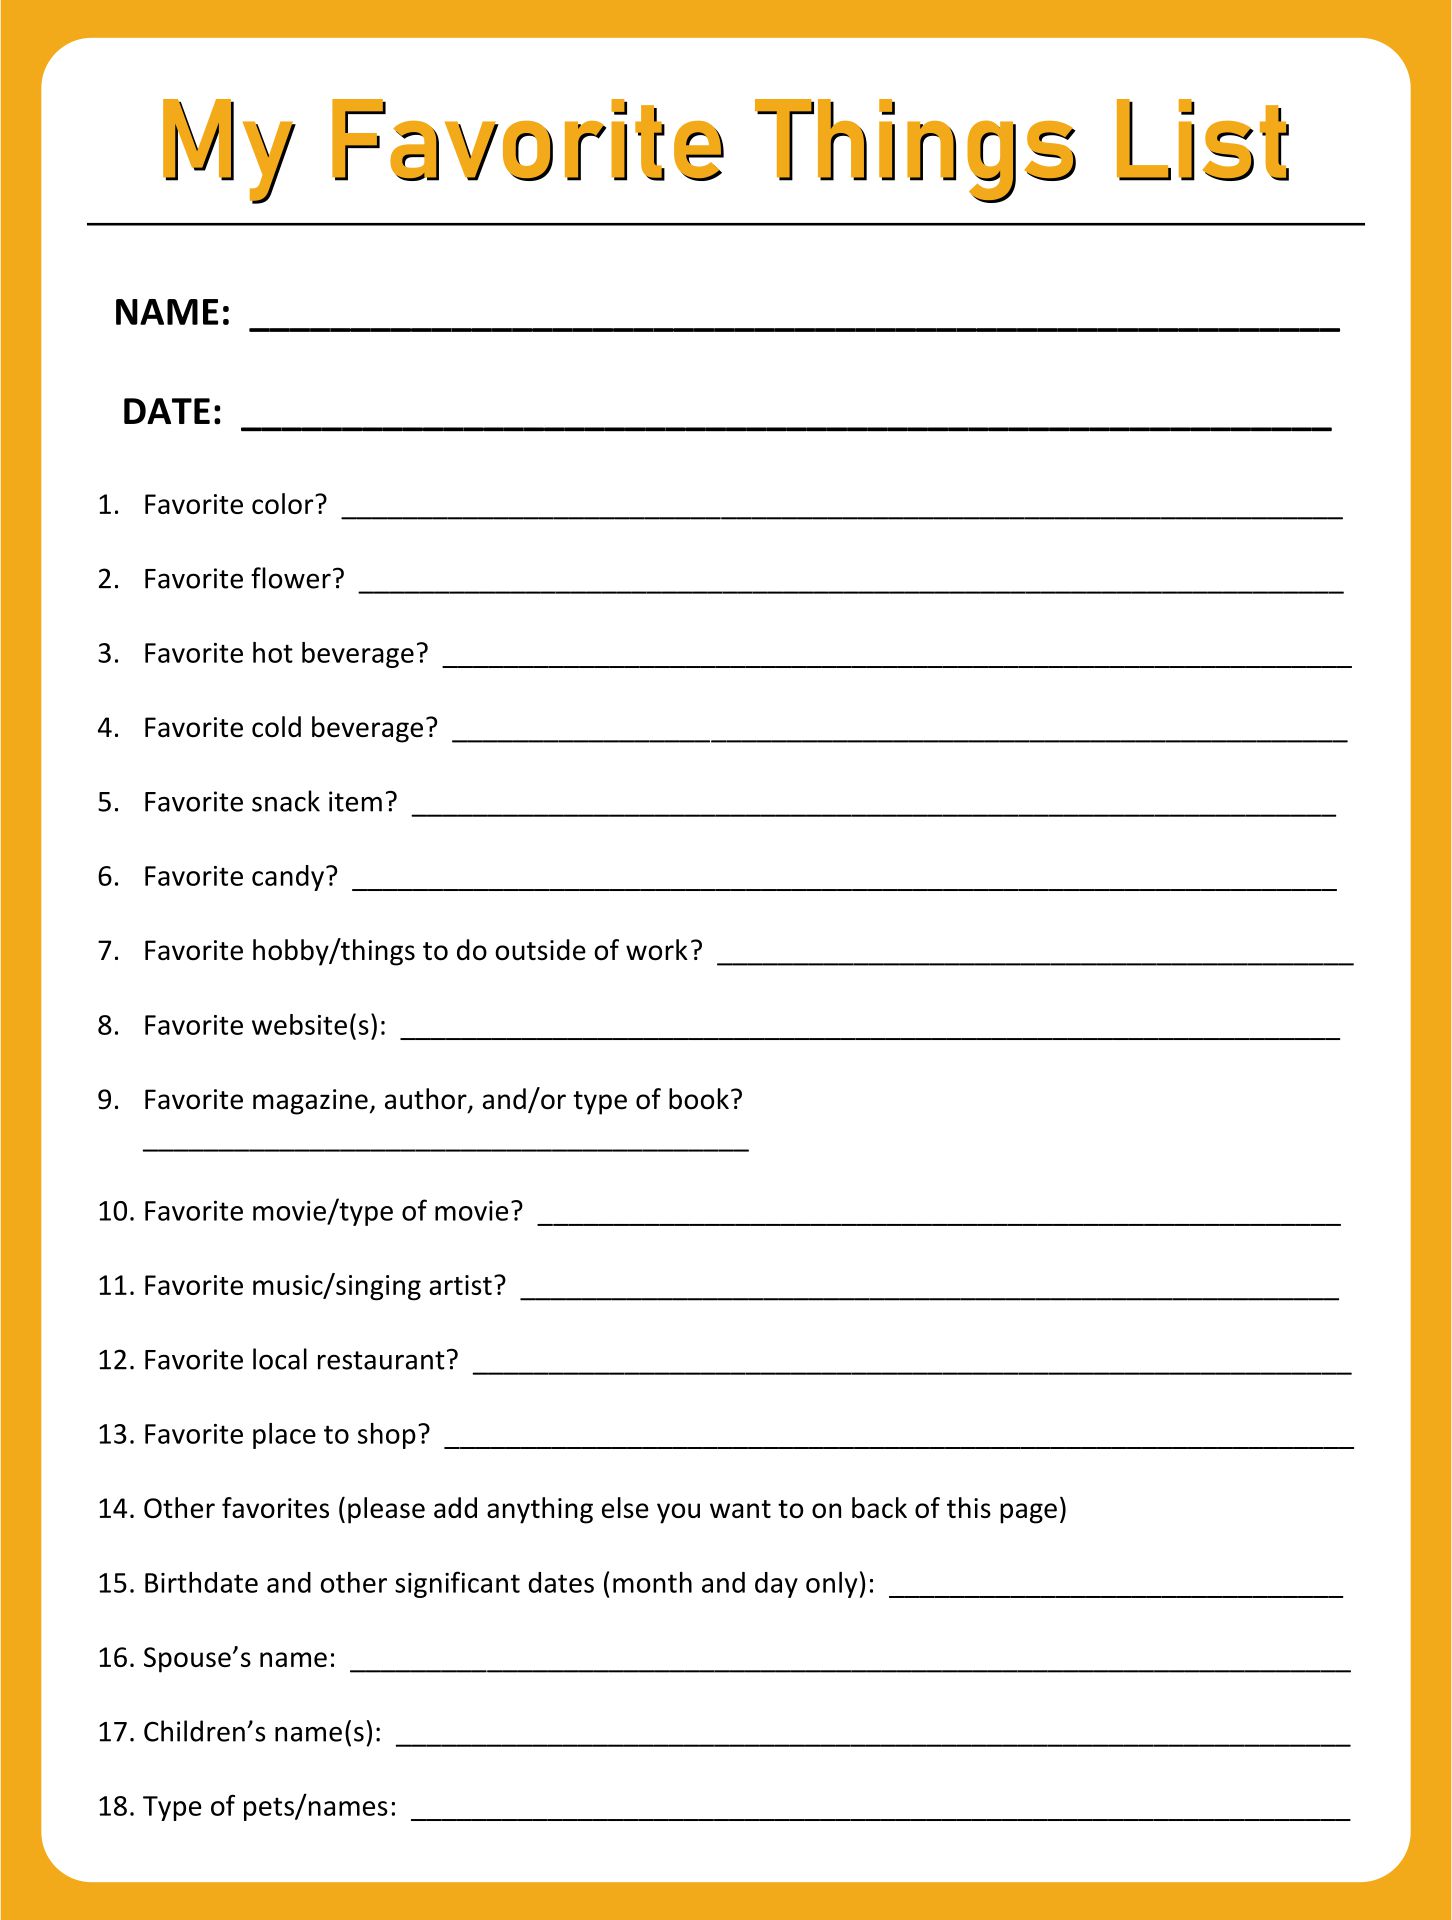 questionnaire-favorite-things-list-printable